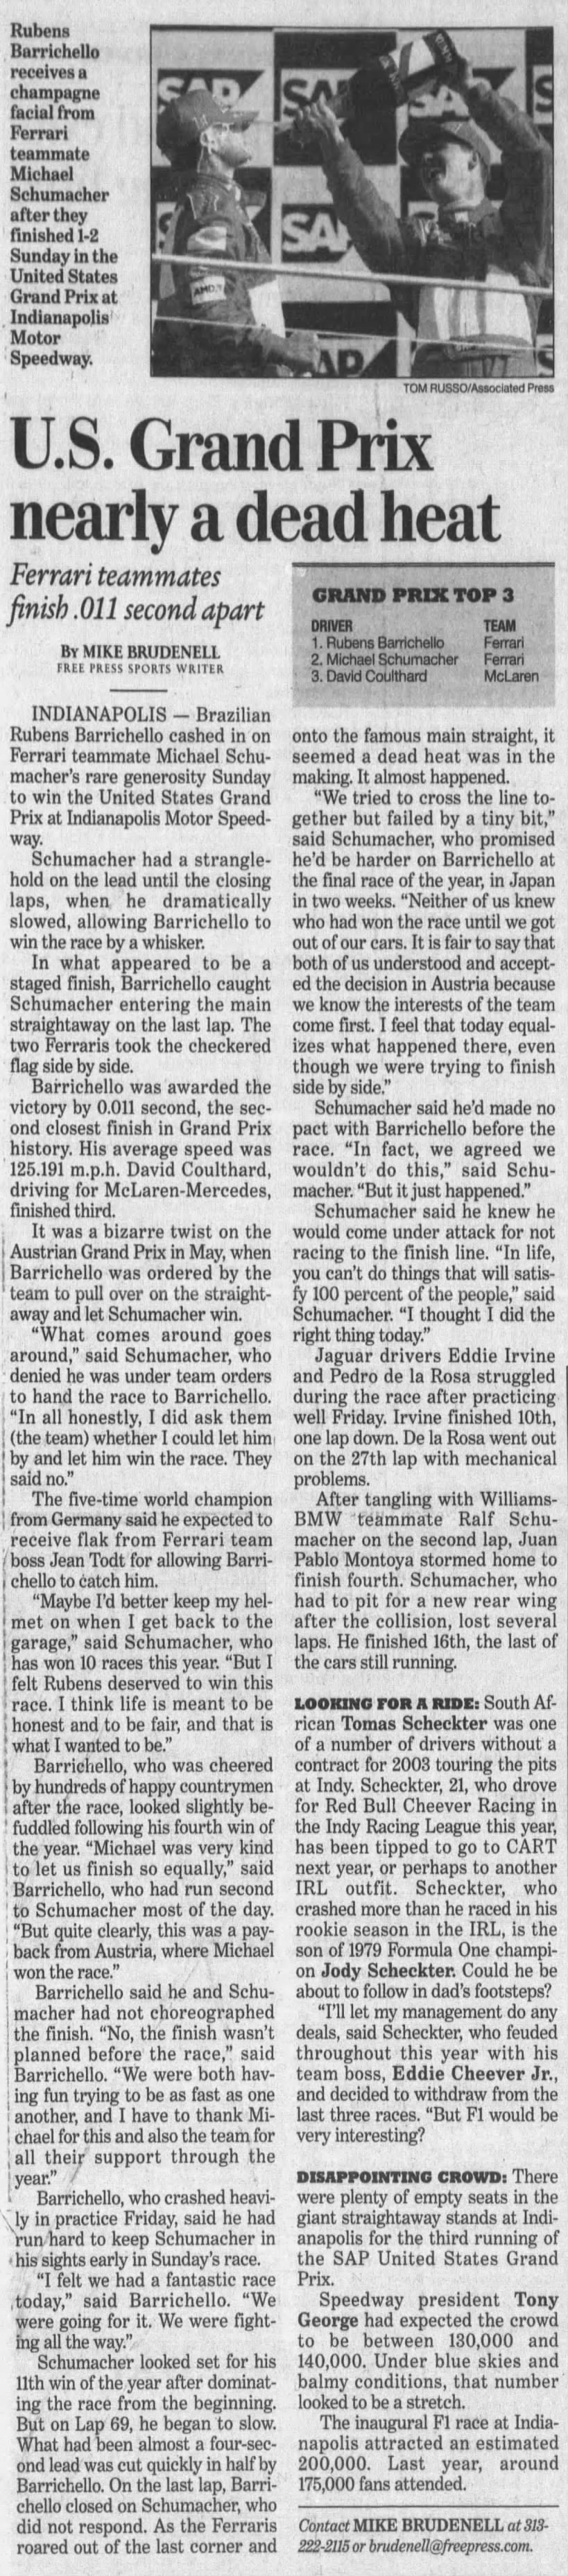 U.S. Grand Prix nearly a dead heat - Detroit Free Press - 30 September 2002 - Page 3D